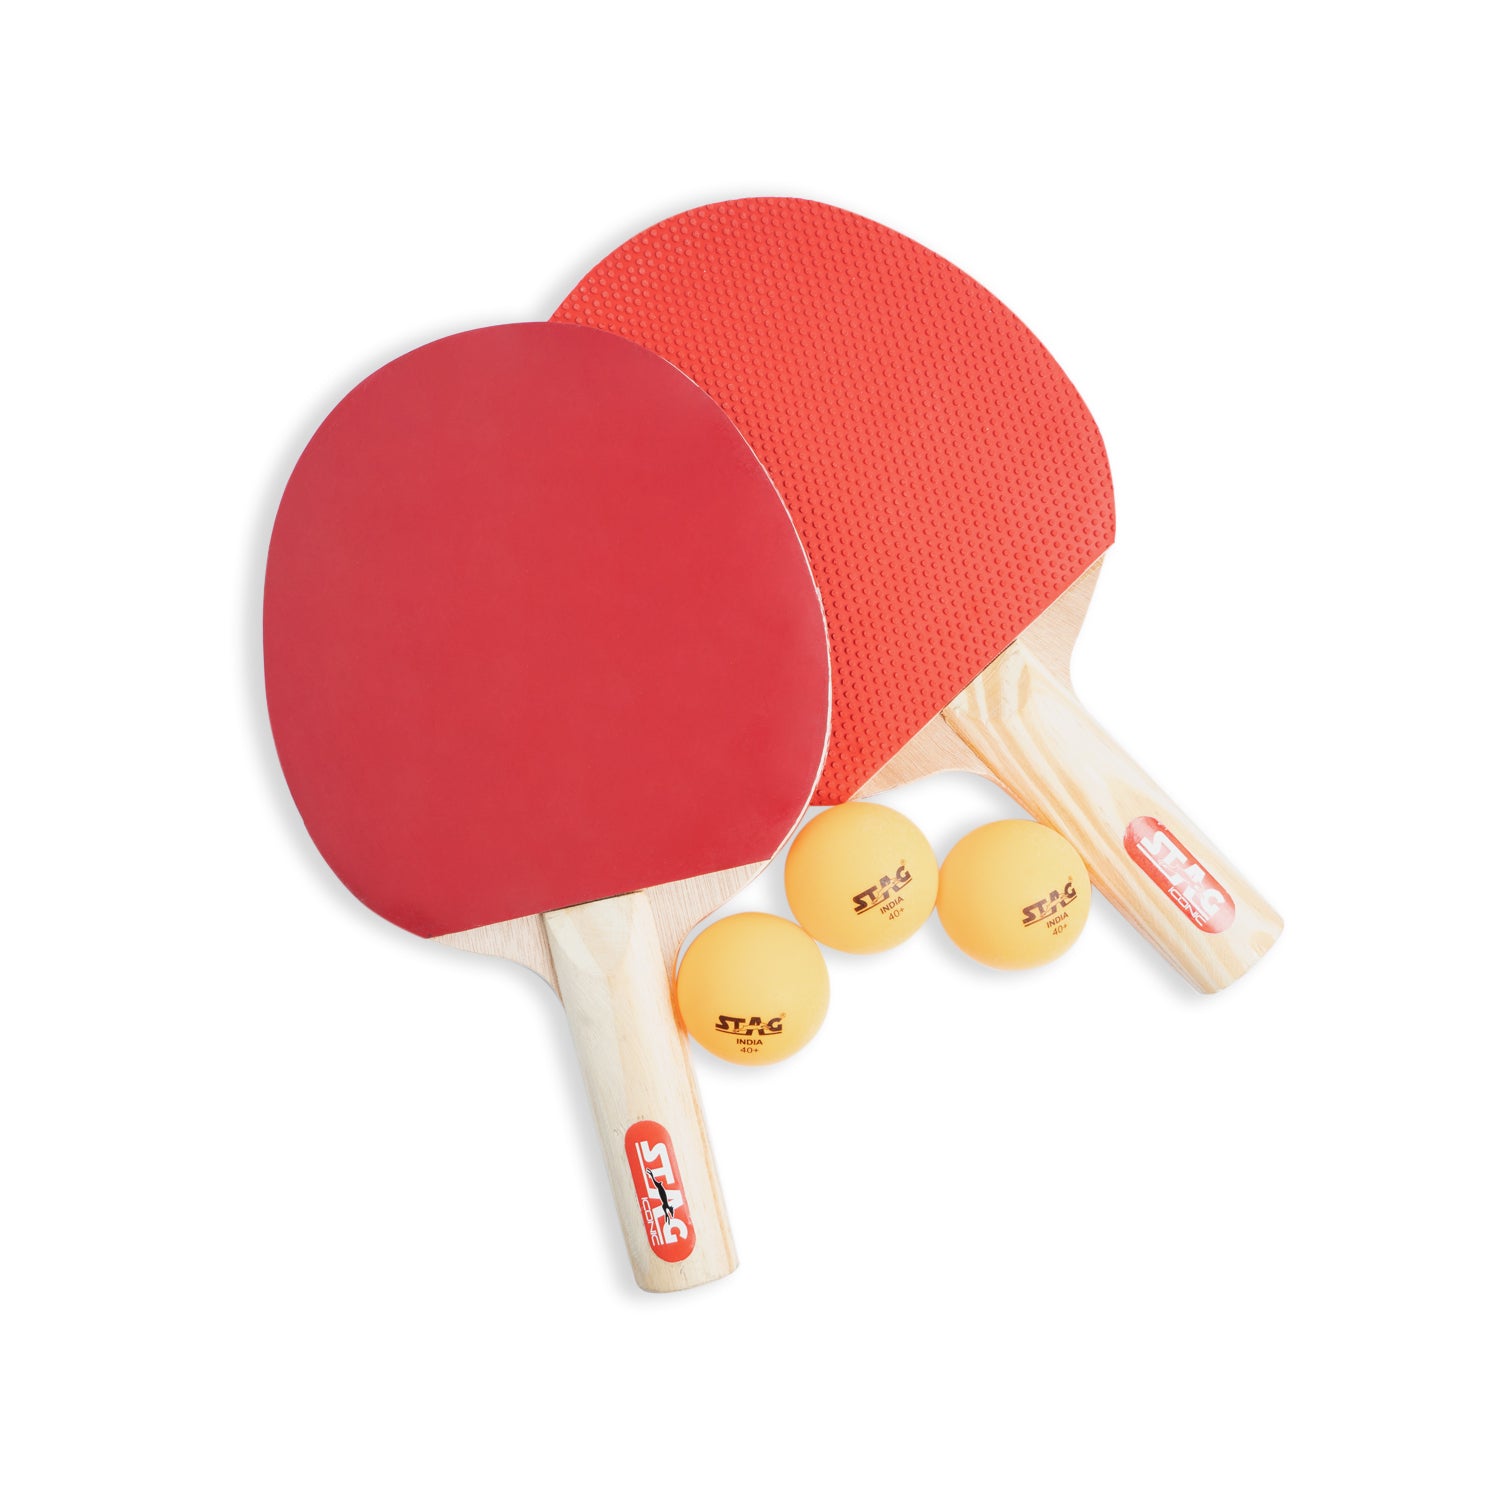 STAG 1 STAR Professional Table Tennis (T.T) Set Orange